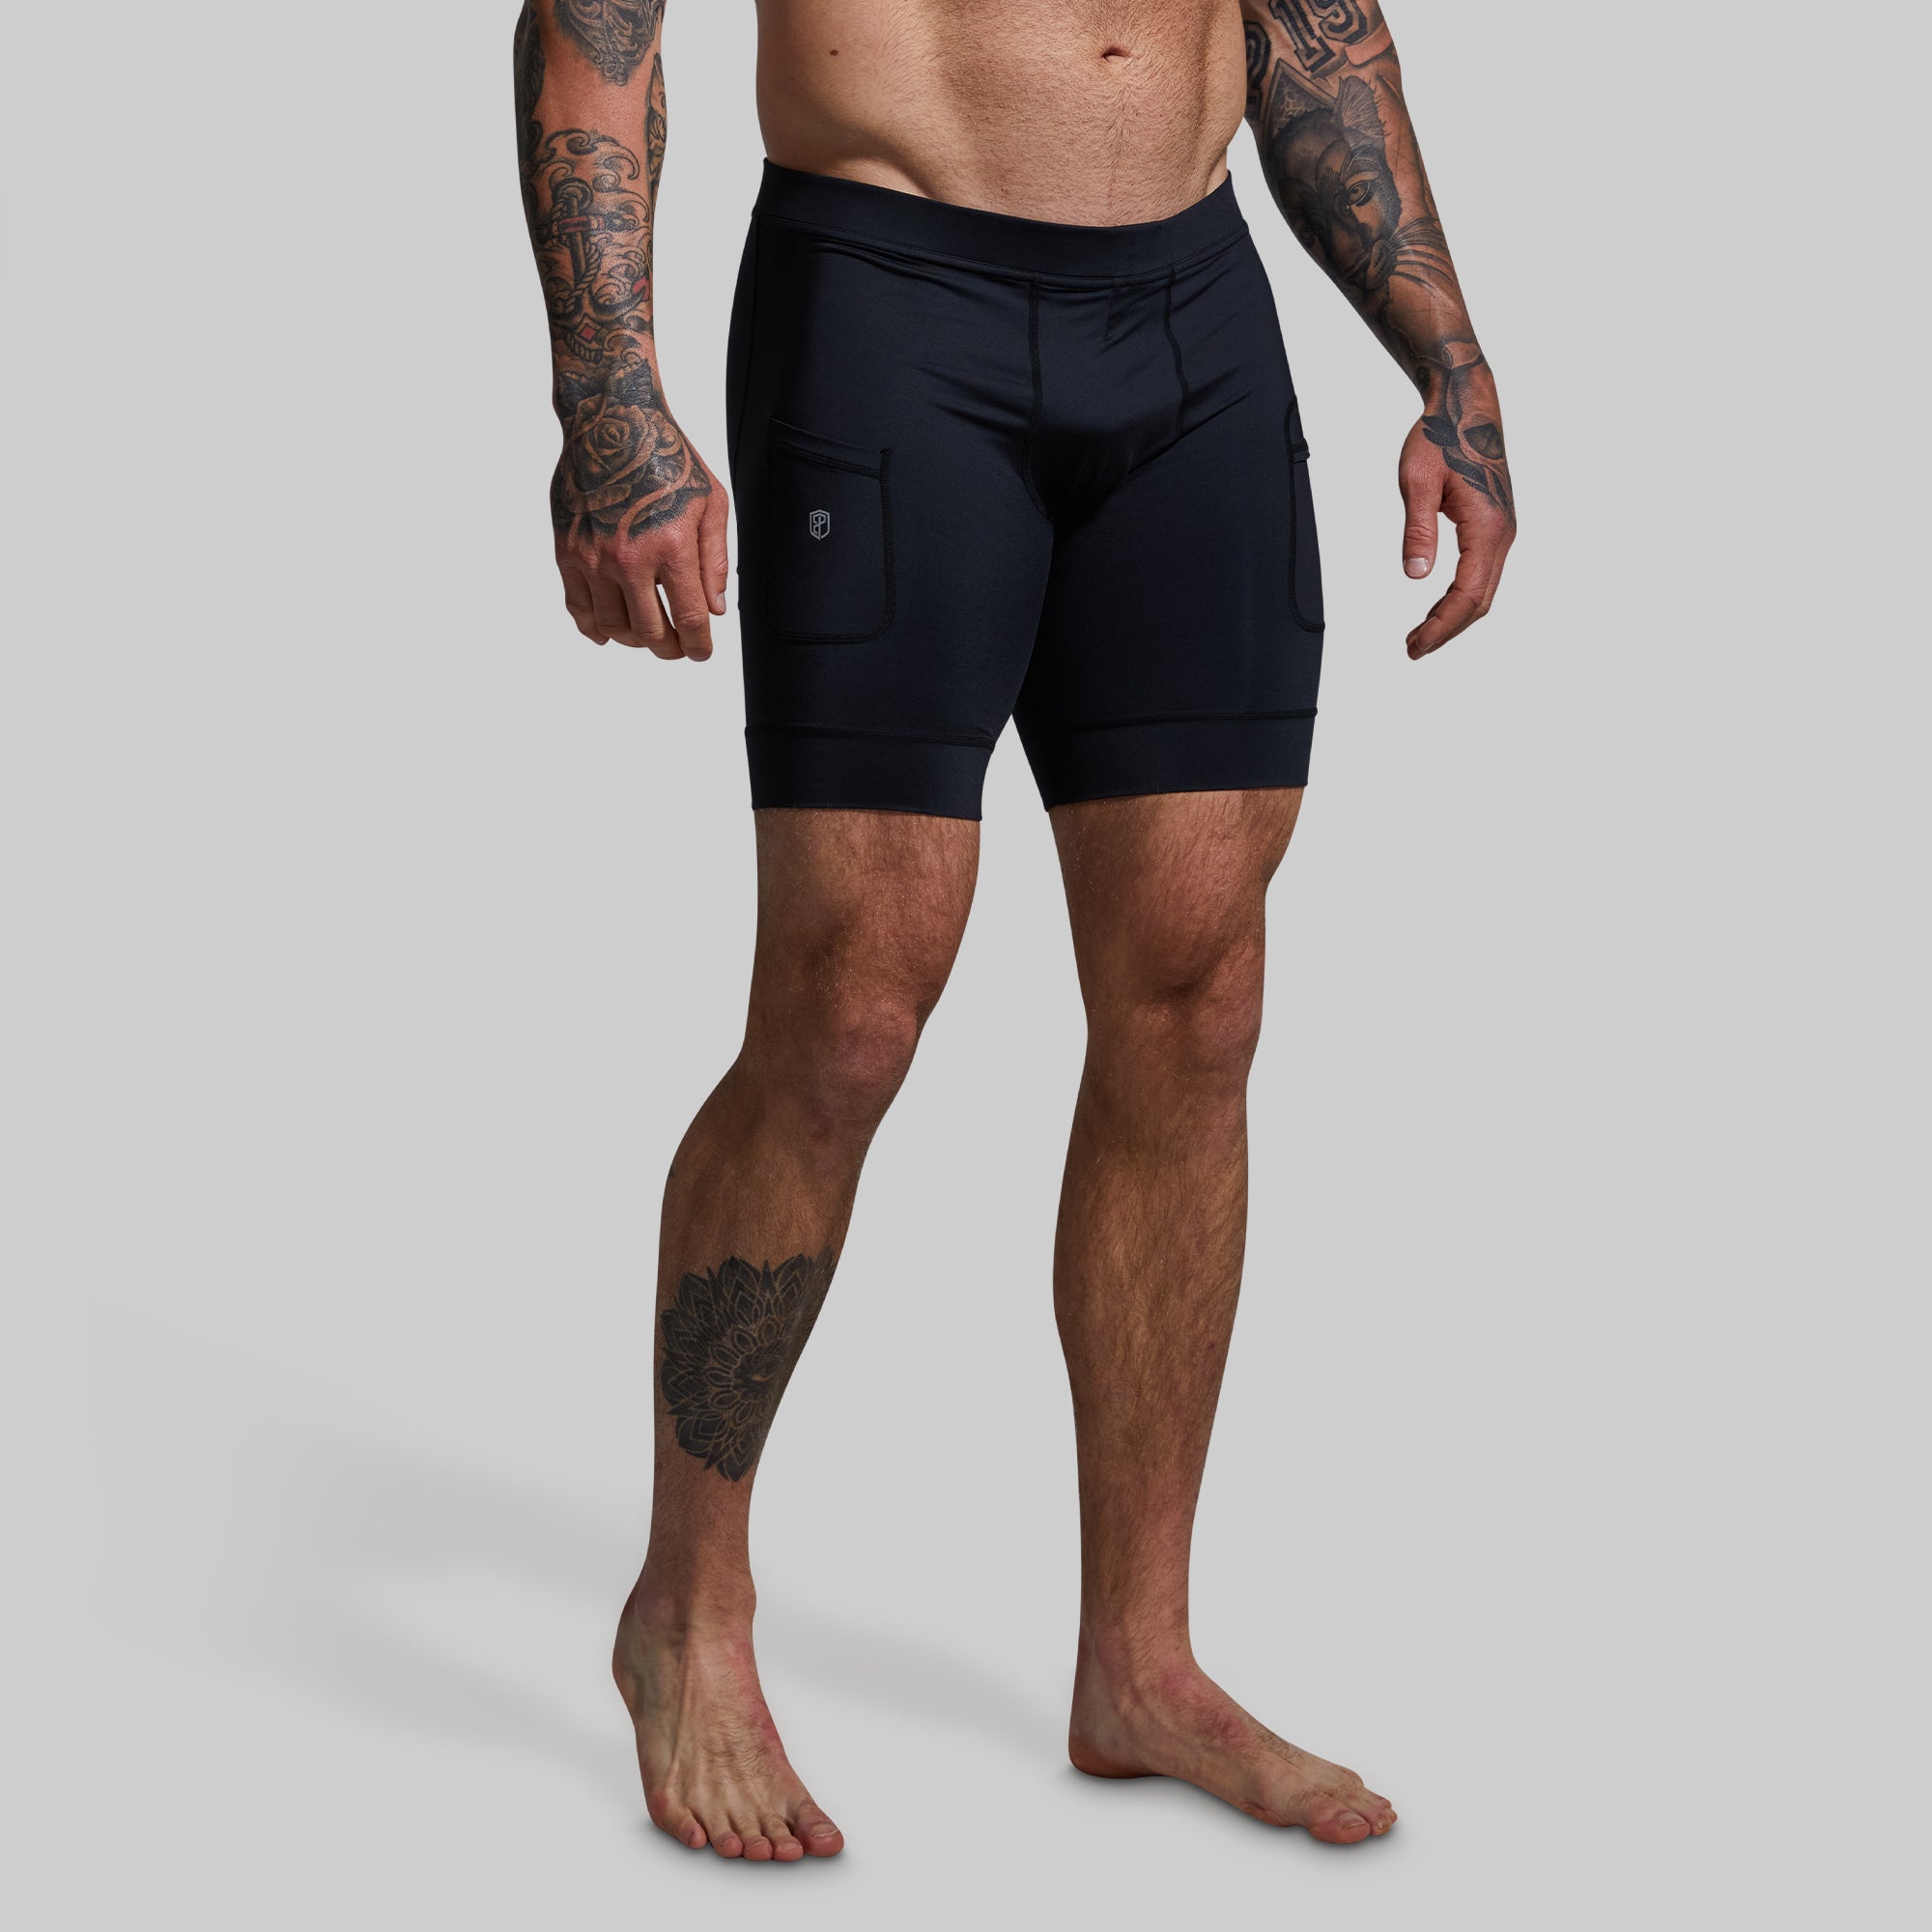 Men's Black Compression Shorts (7 Long Inseam) – Born Primitive